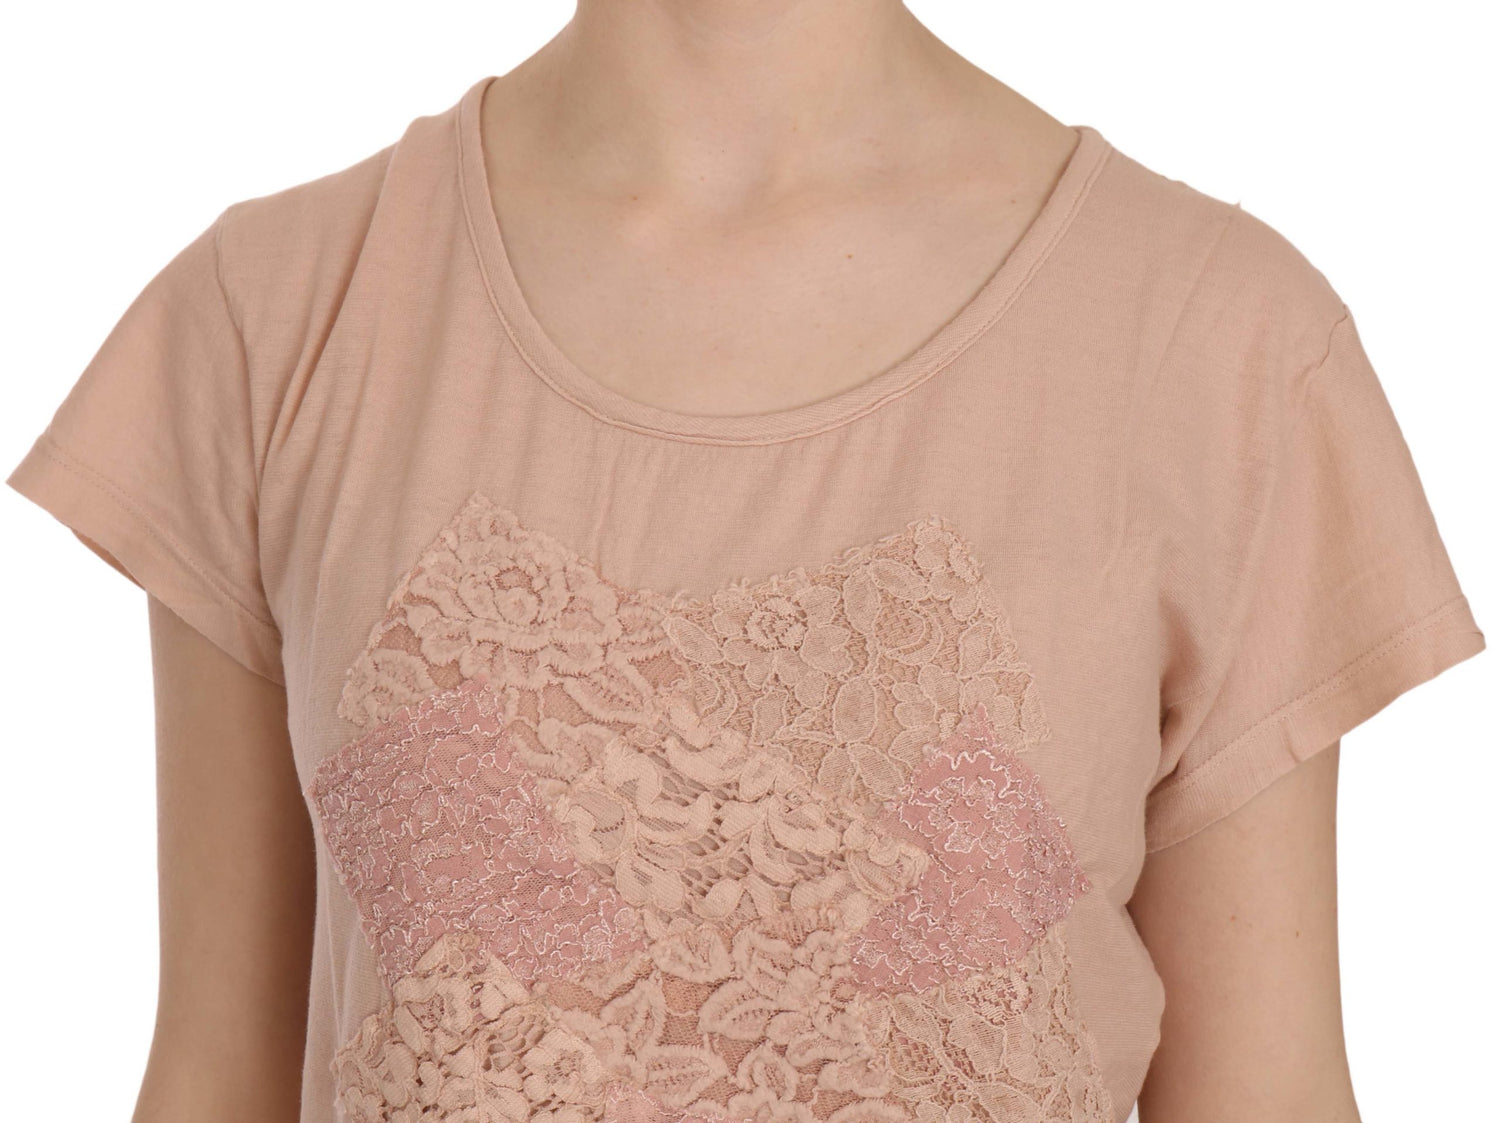 Pink Cream Lace Short Sleeve Shirt Top Cotton Blouse